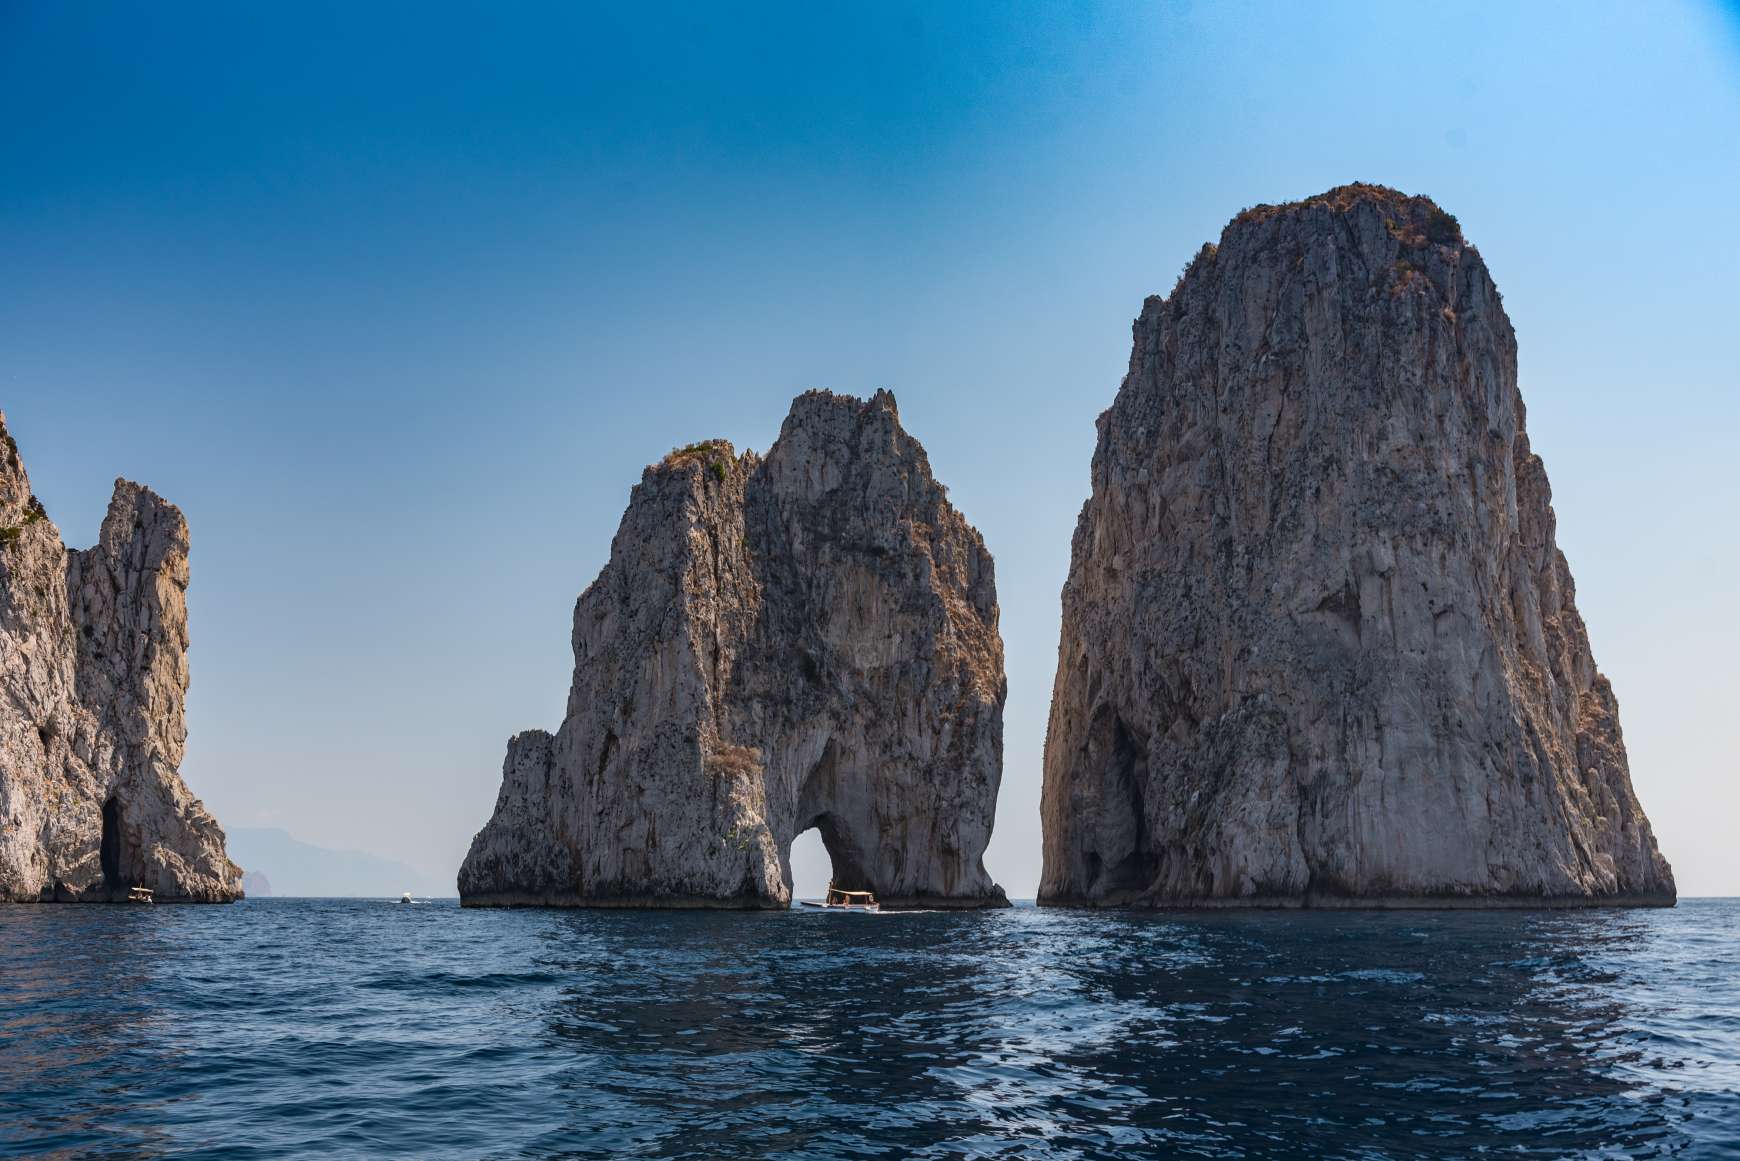 The three Faraglioni rocks of Capri jutting out from the sea